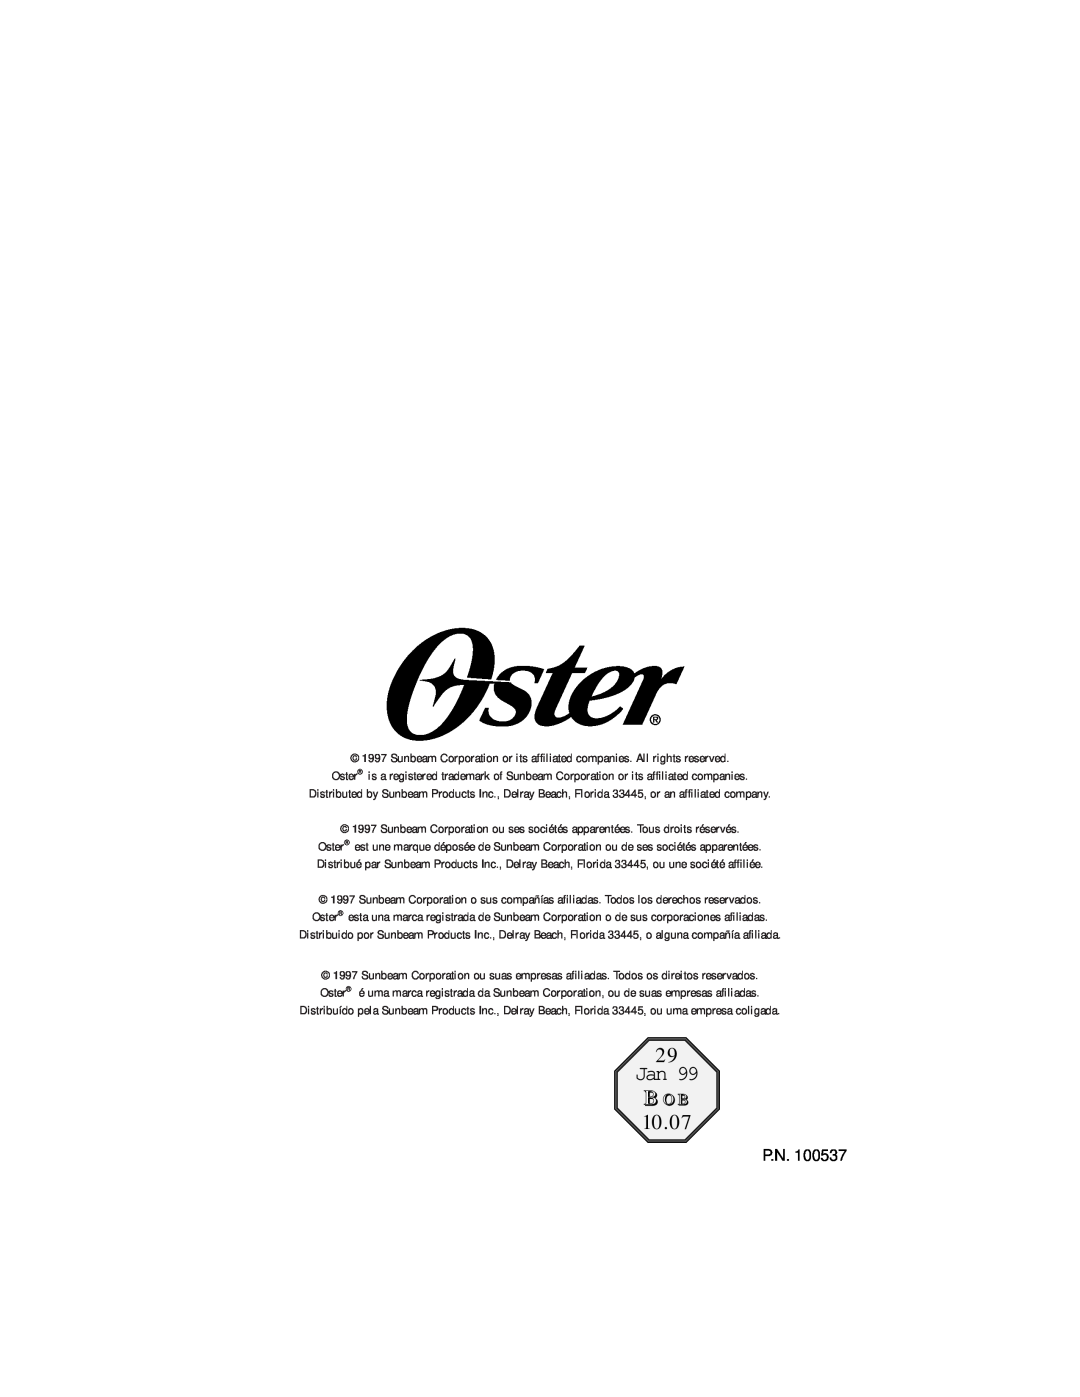 Oster 4718 instruction manual 10.07, Bo B, P.N 